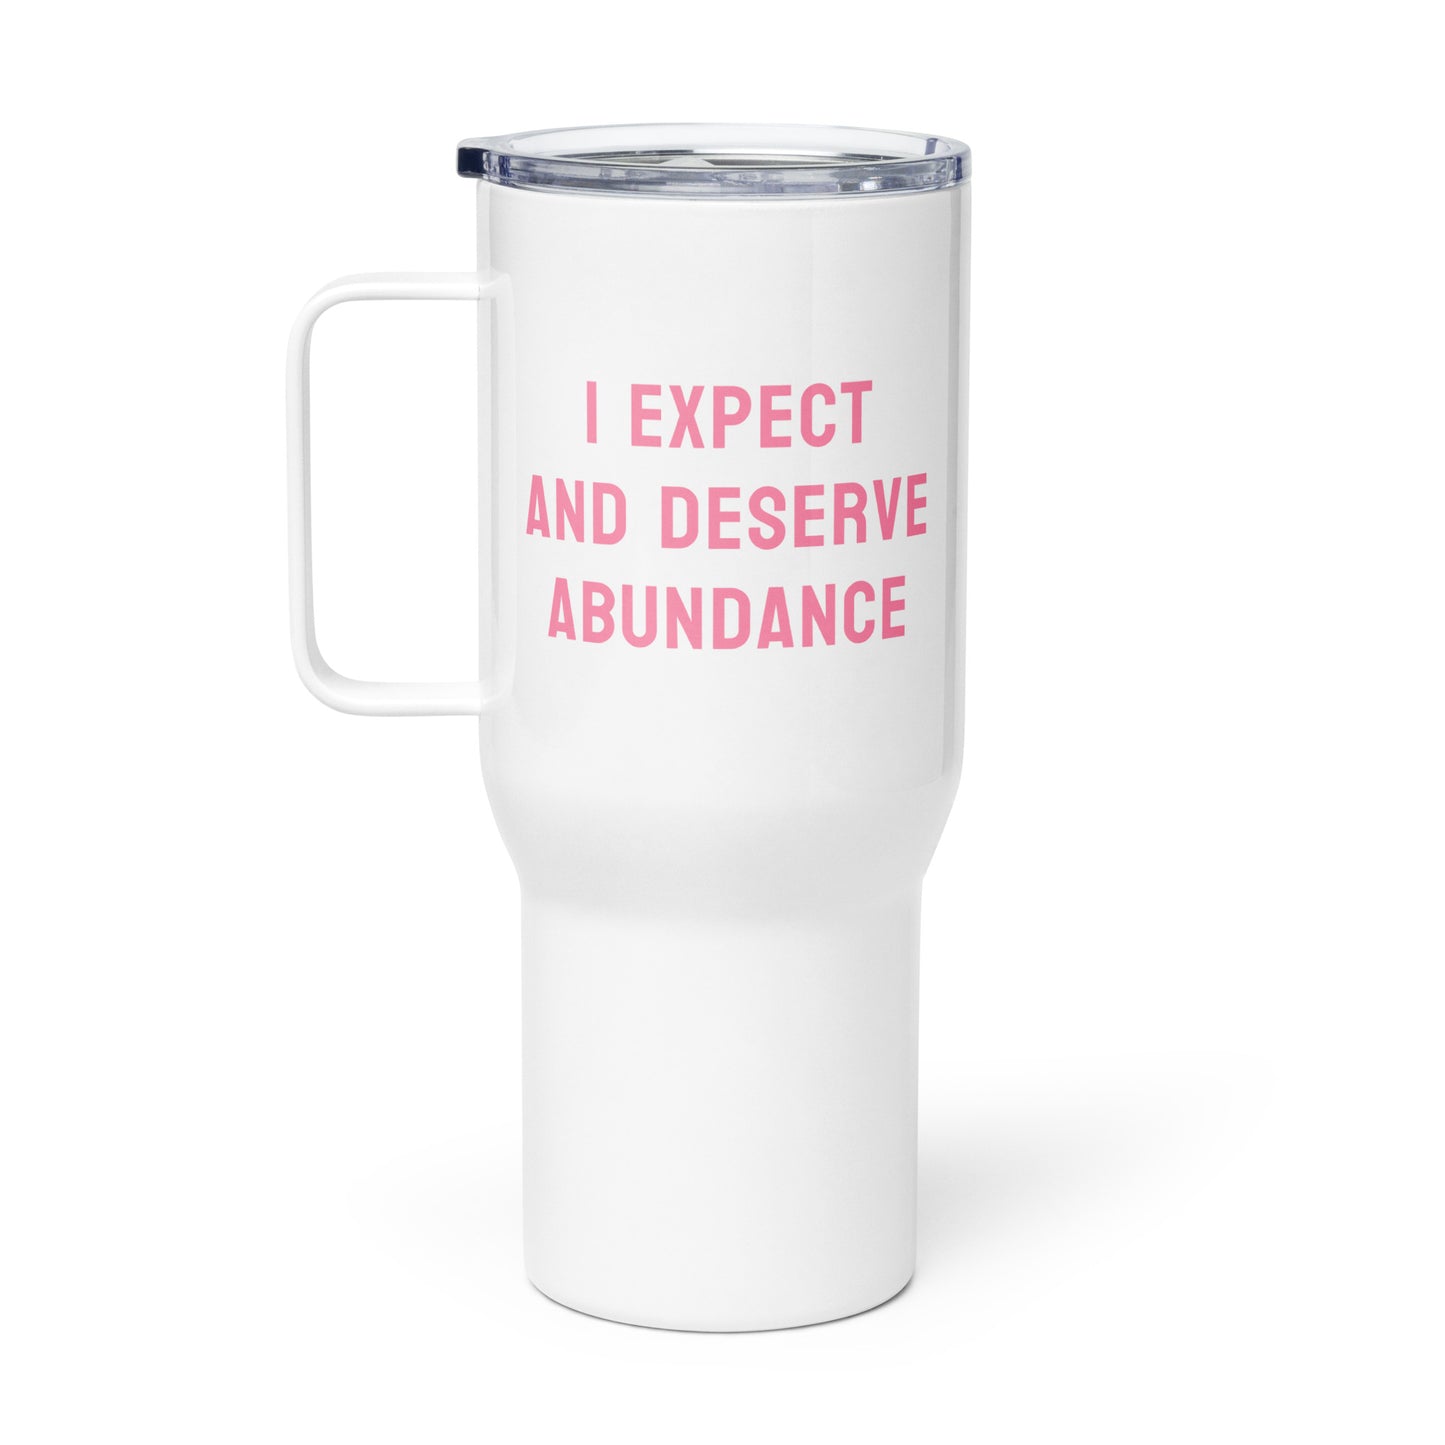 Abundance Travel mug with handle